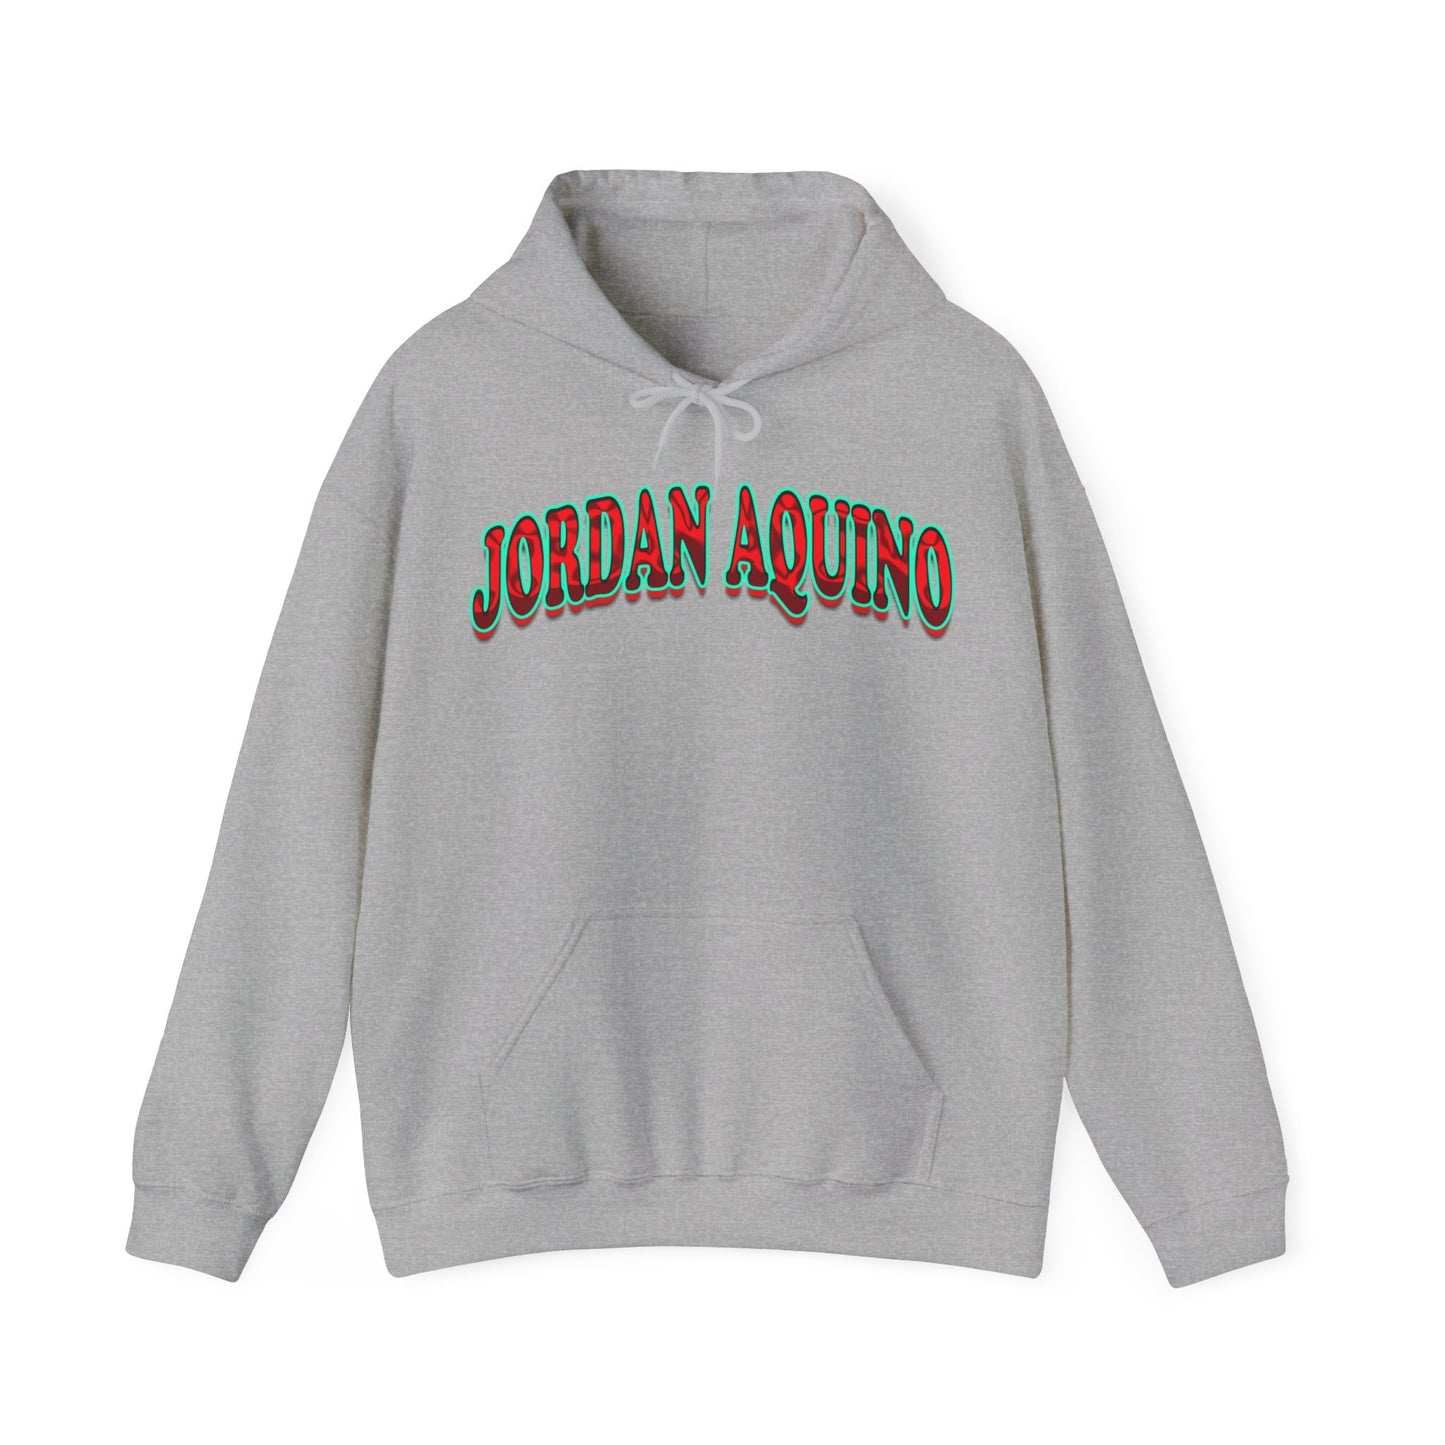 Jordan Aquino Hoodie